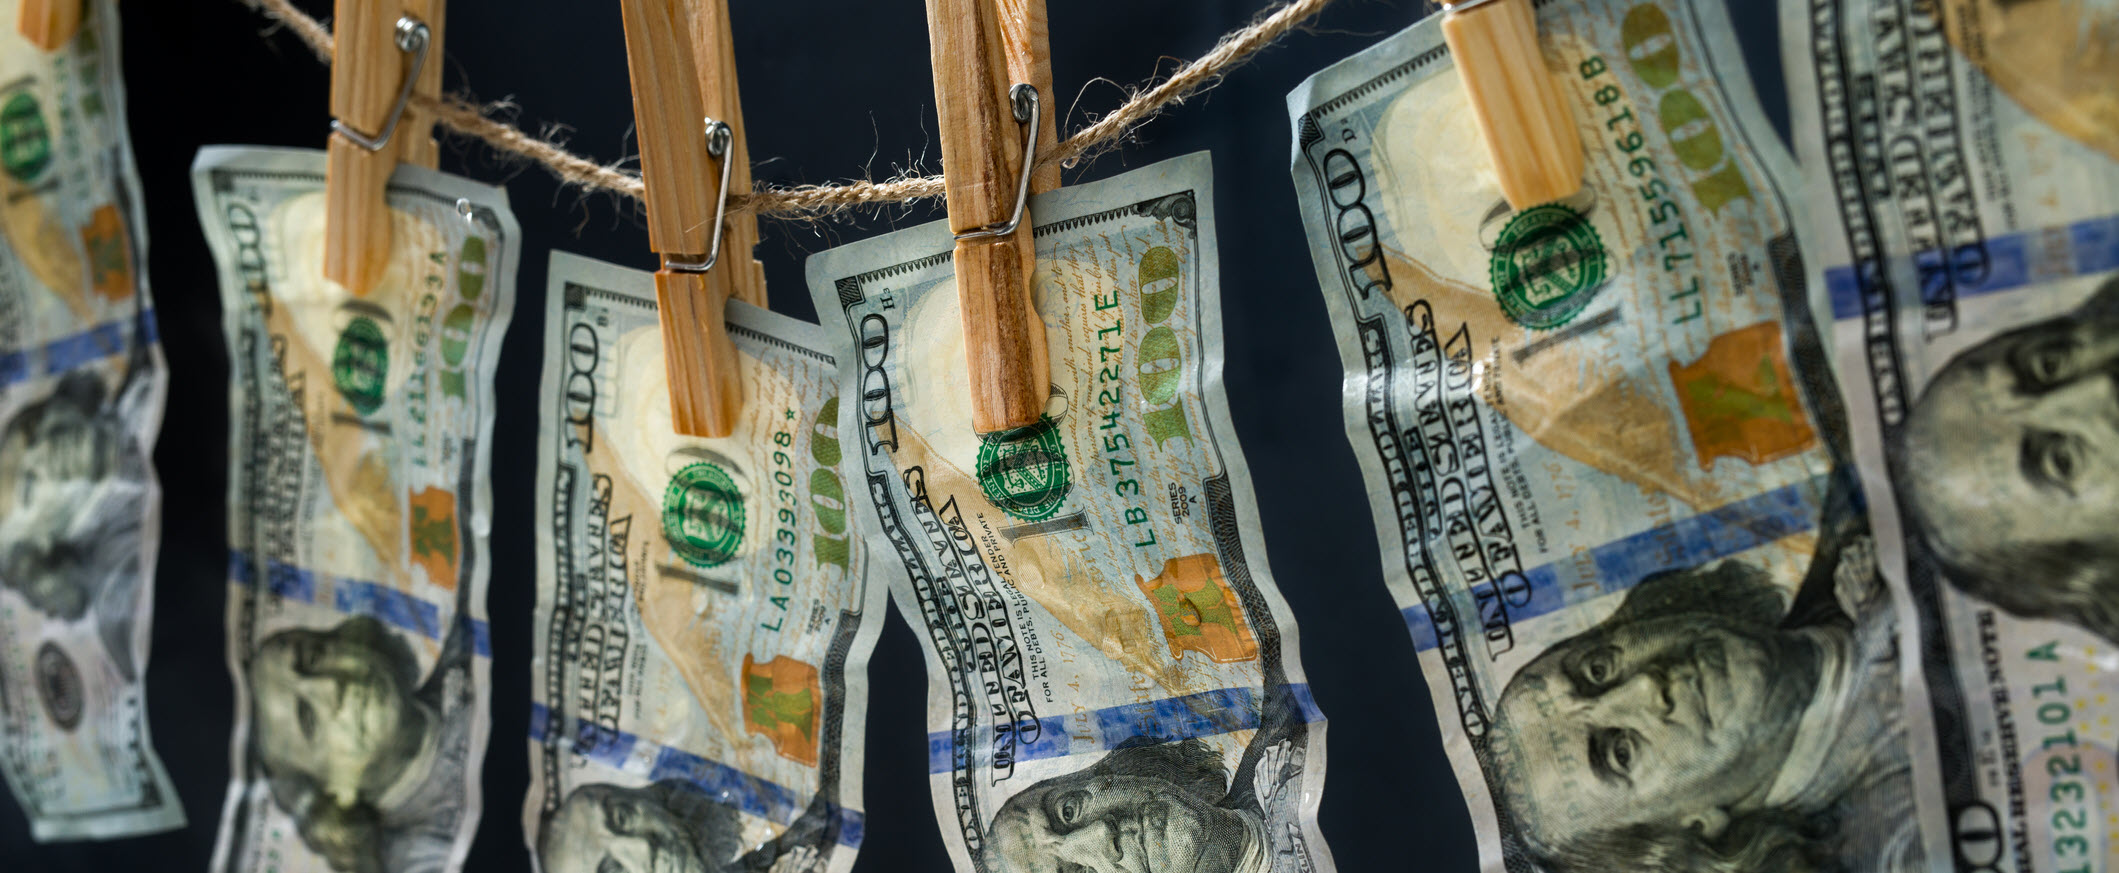 Depiction of money laundering